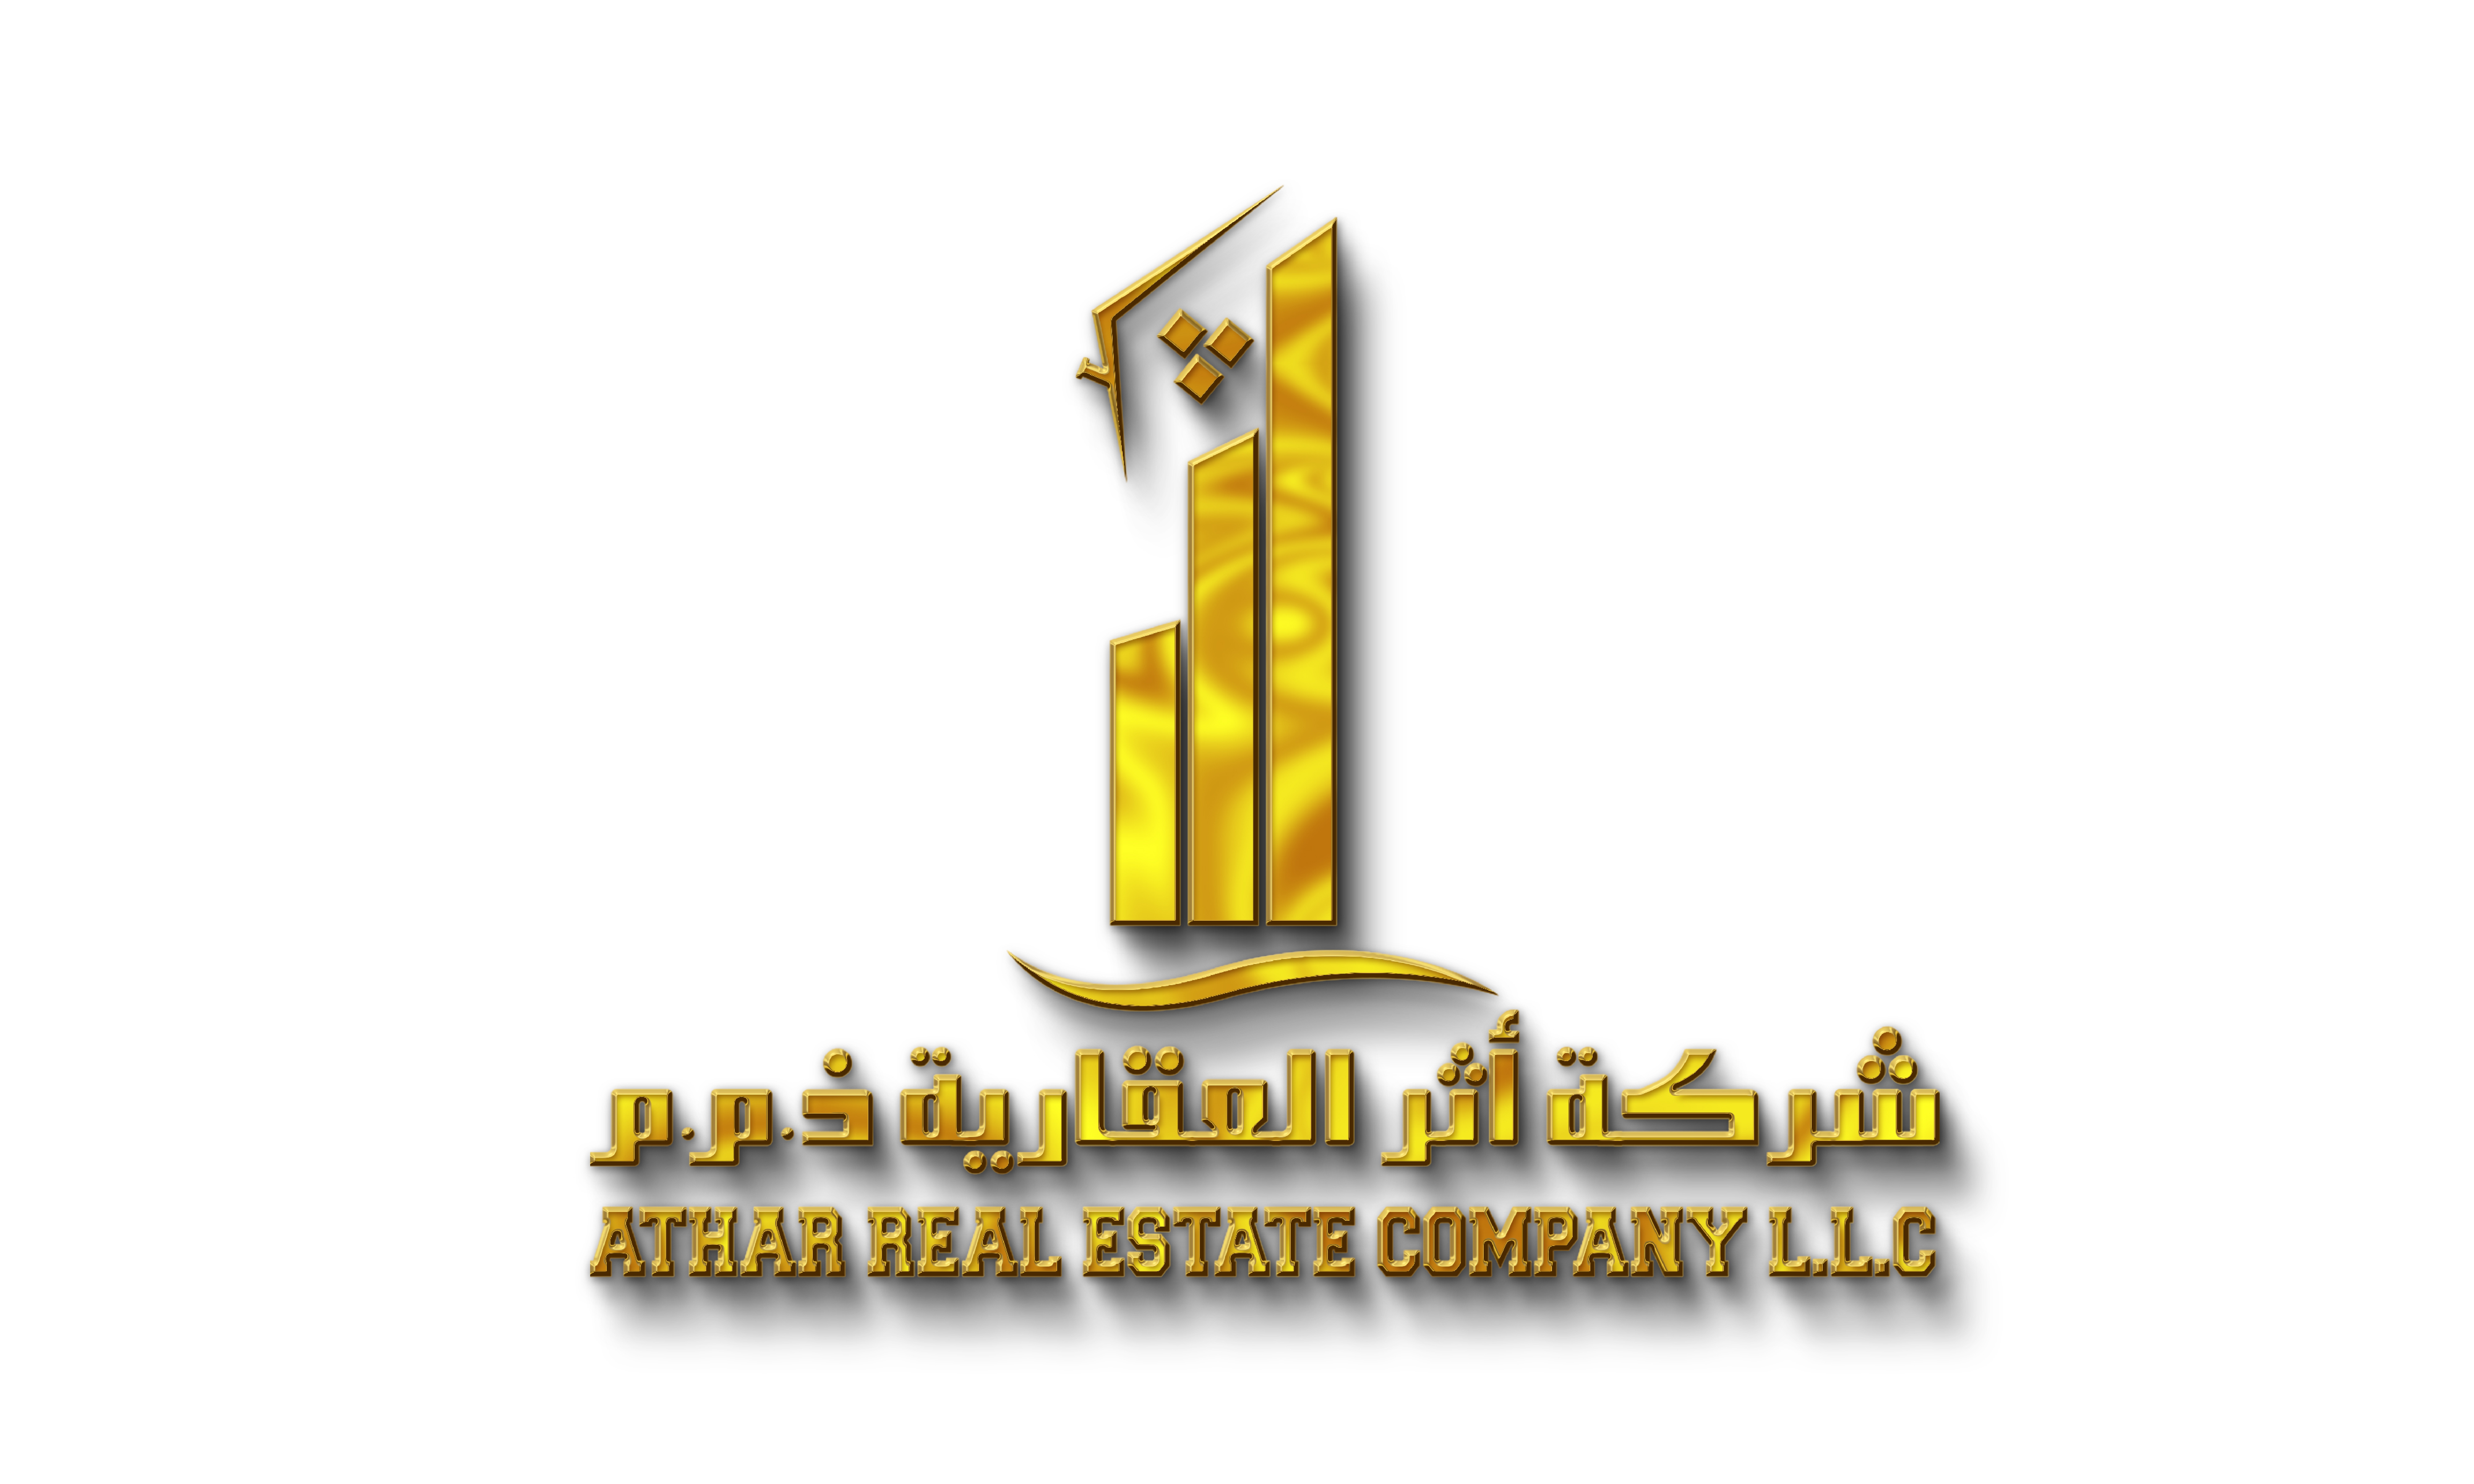 Athar Real Estate Company